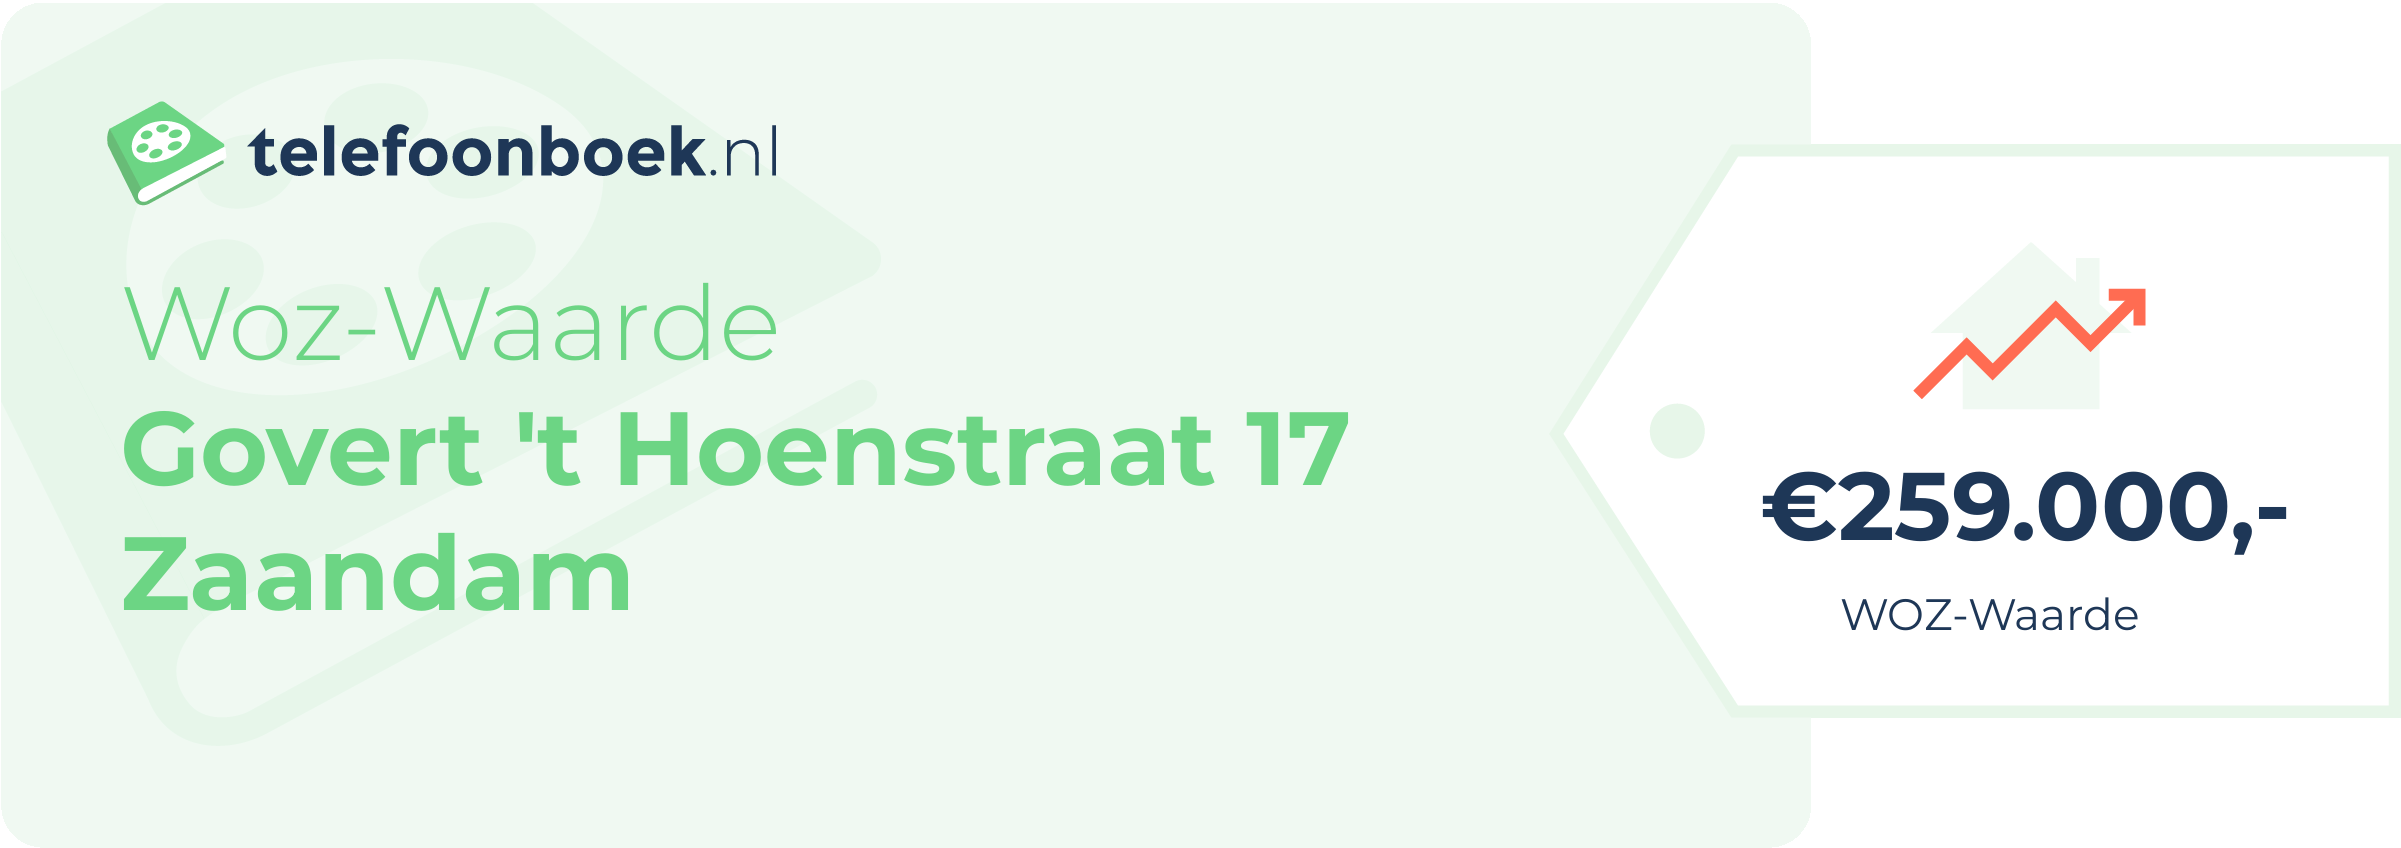 WOZ-waarde Govert 't Hoenstraat 17 Zaandam